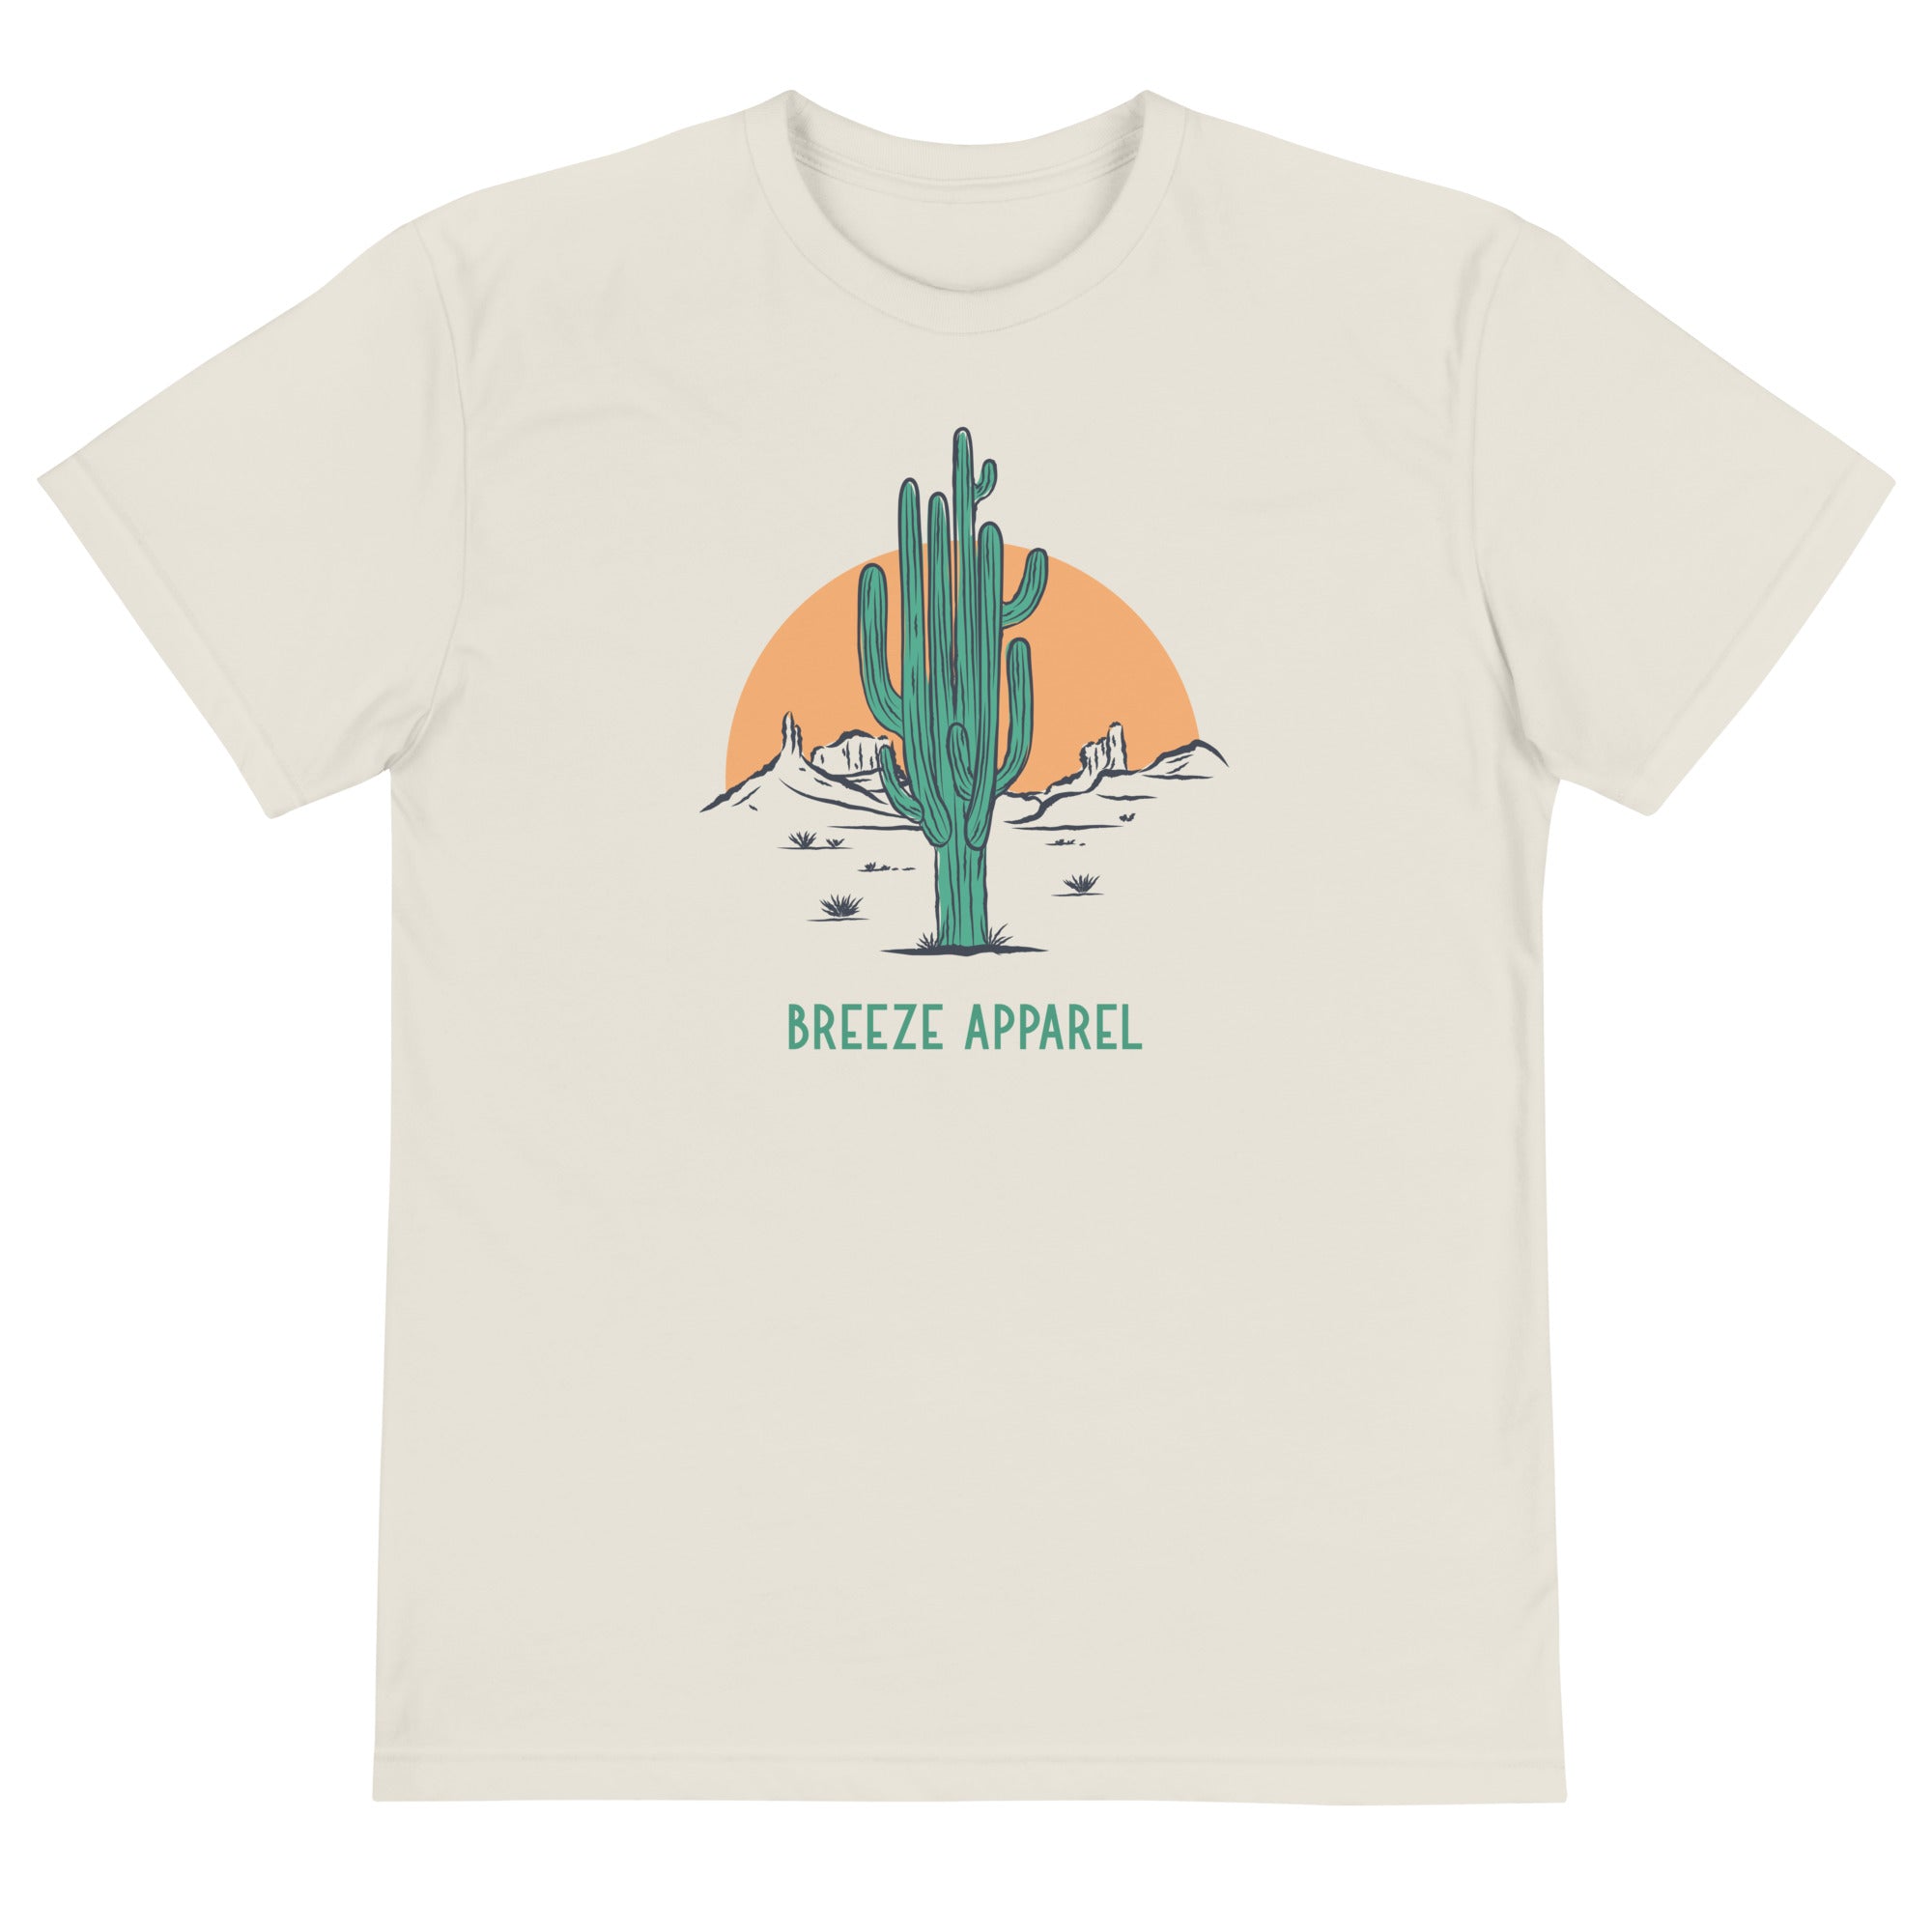 'Cactus Sunset' unisex eco tee